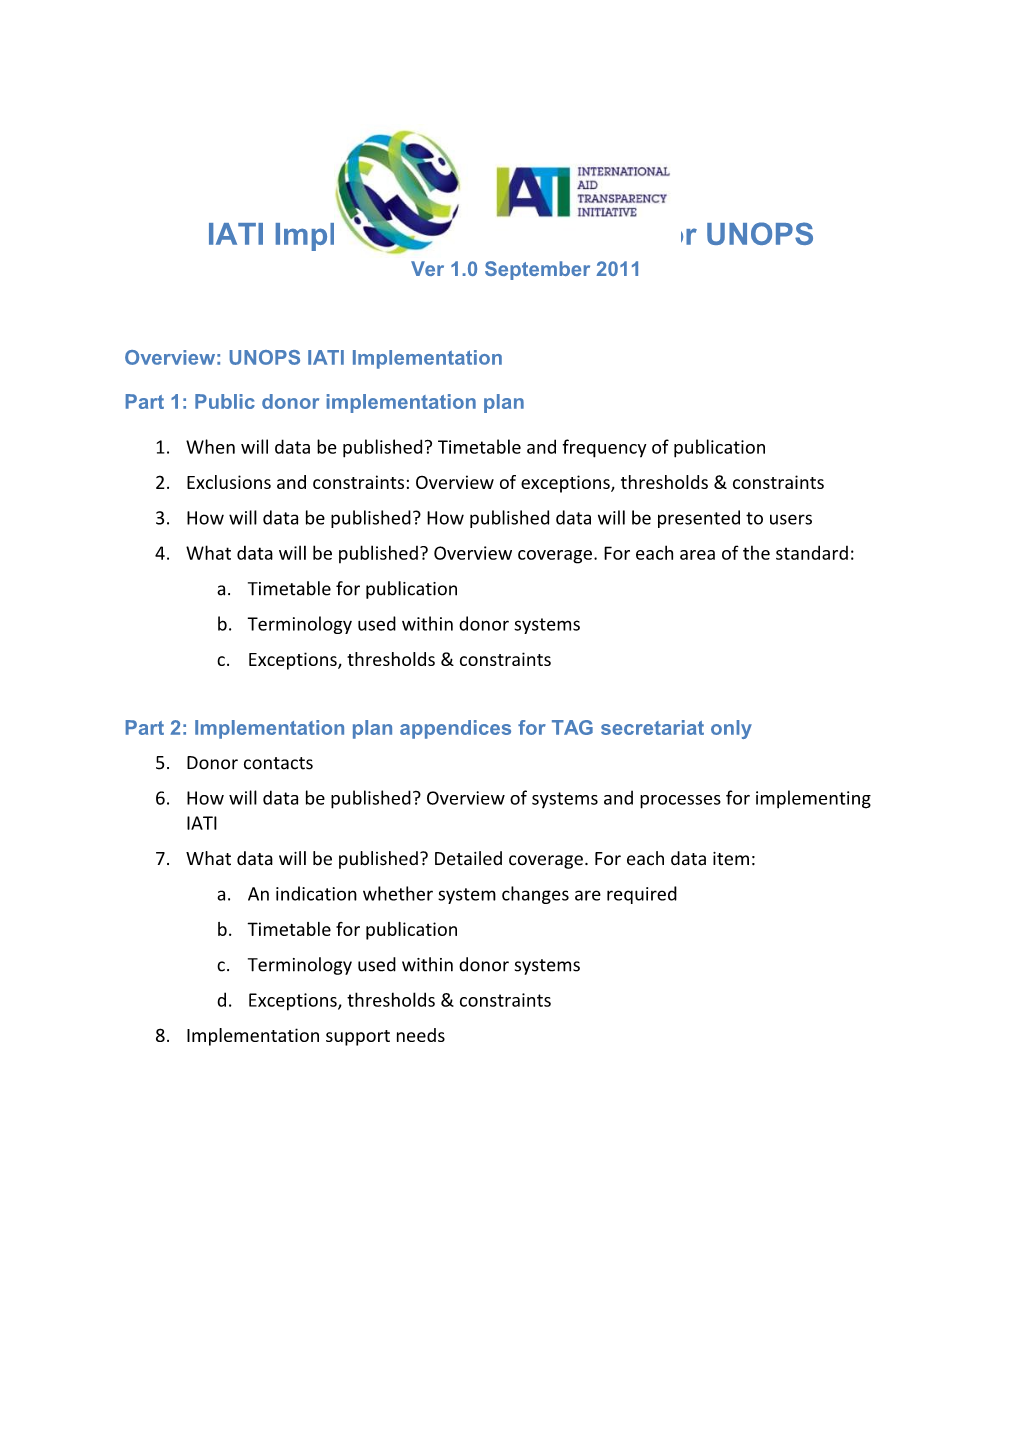 IATI Implementation Schedule for UNOPS